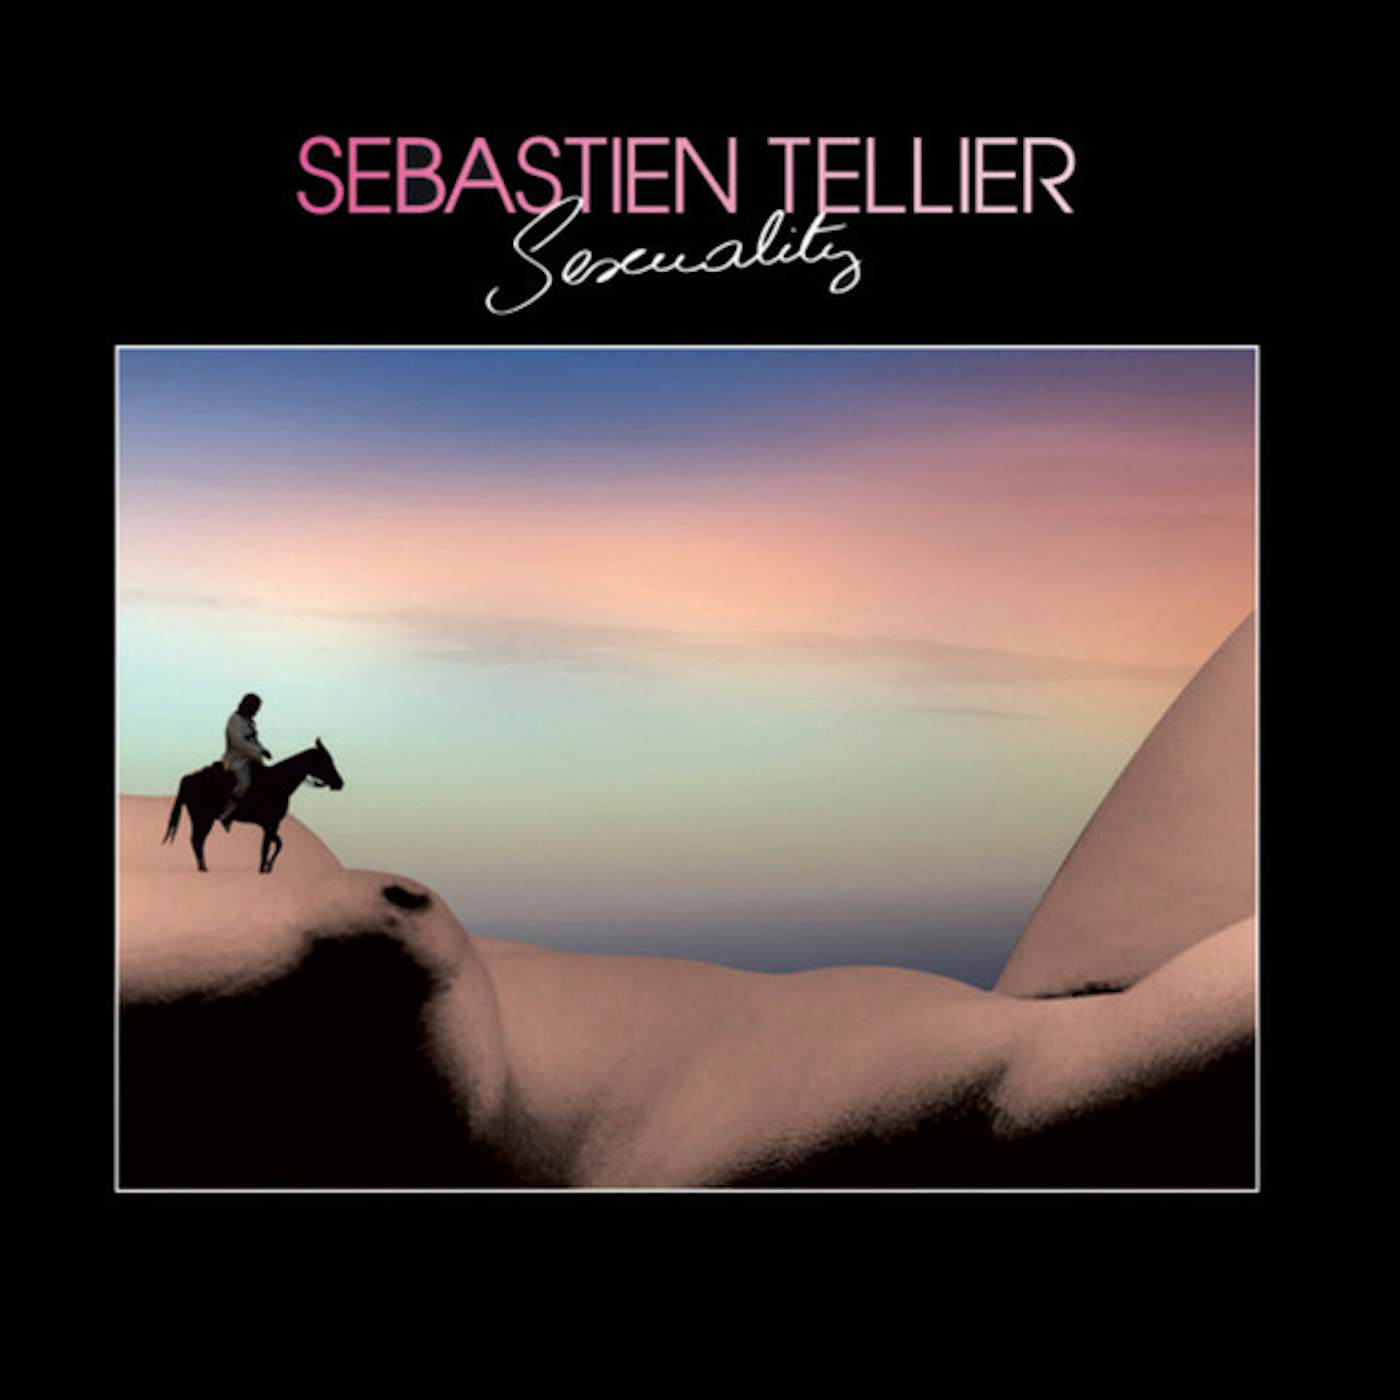 Sébastien Tellier Sexuality Vinyl Record